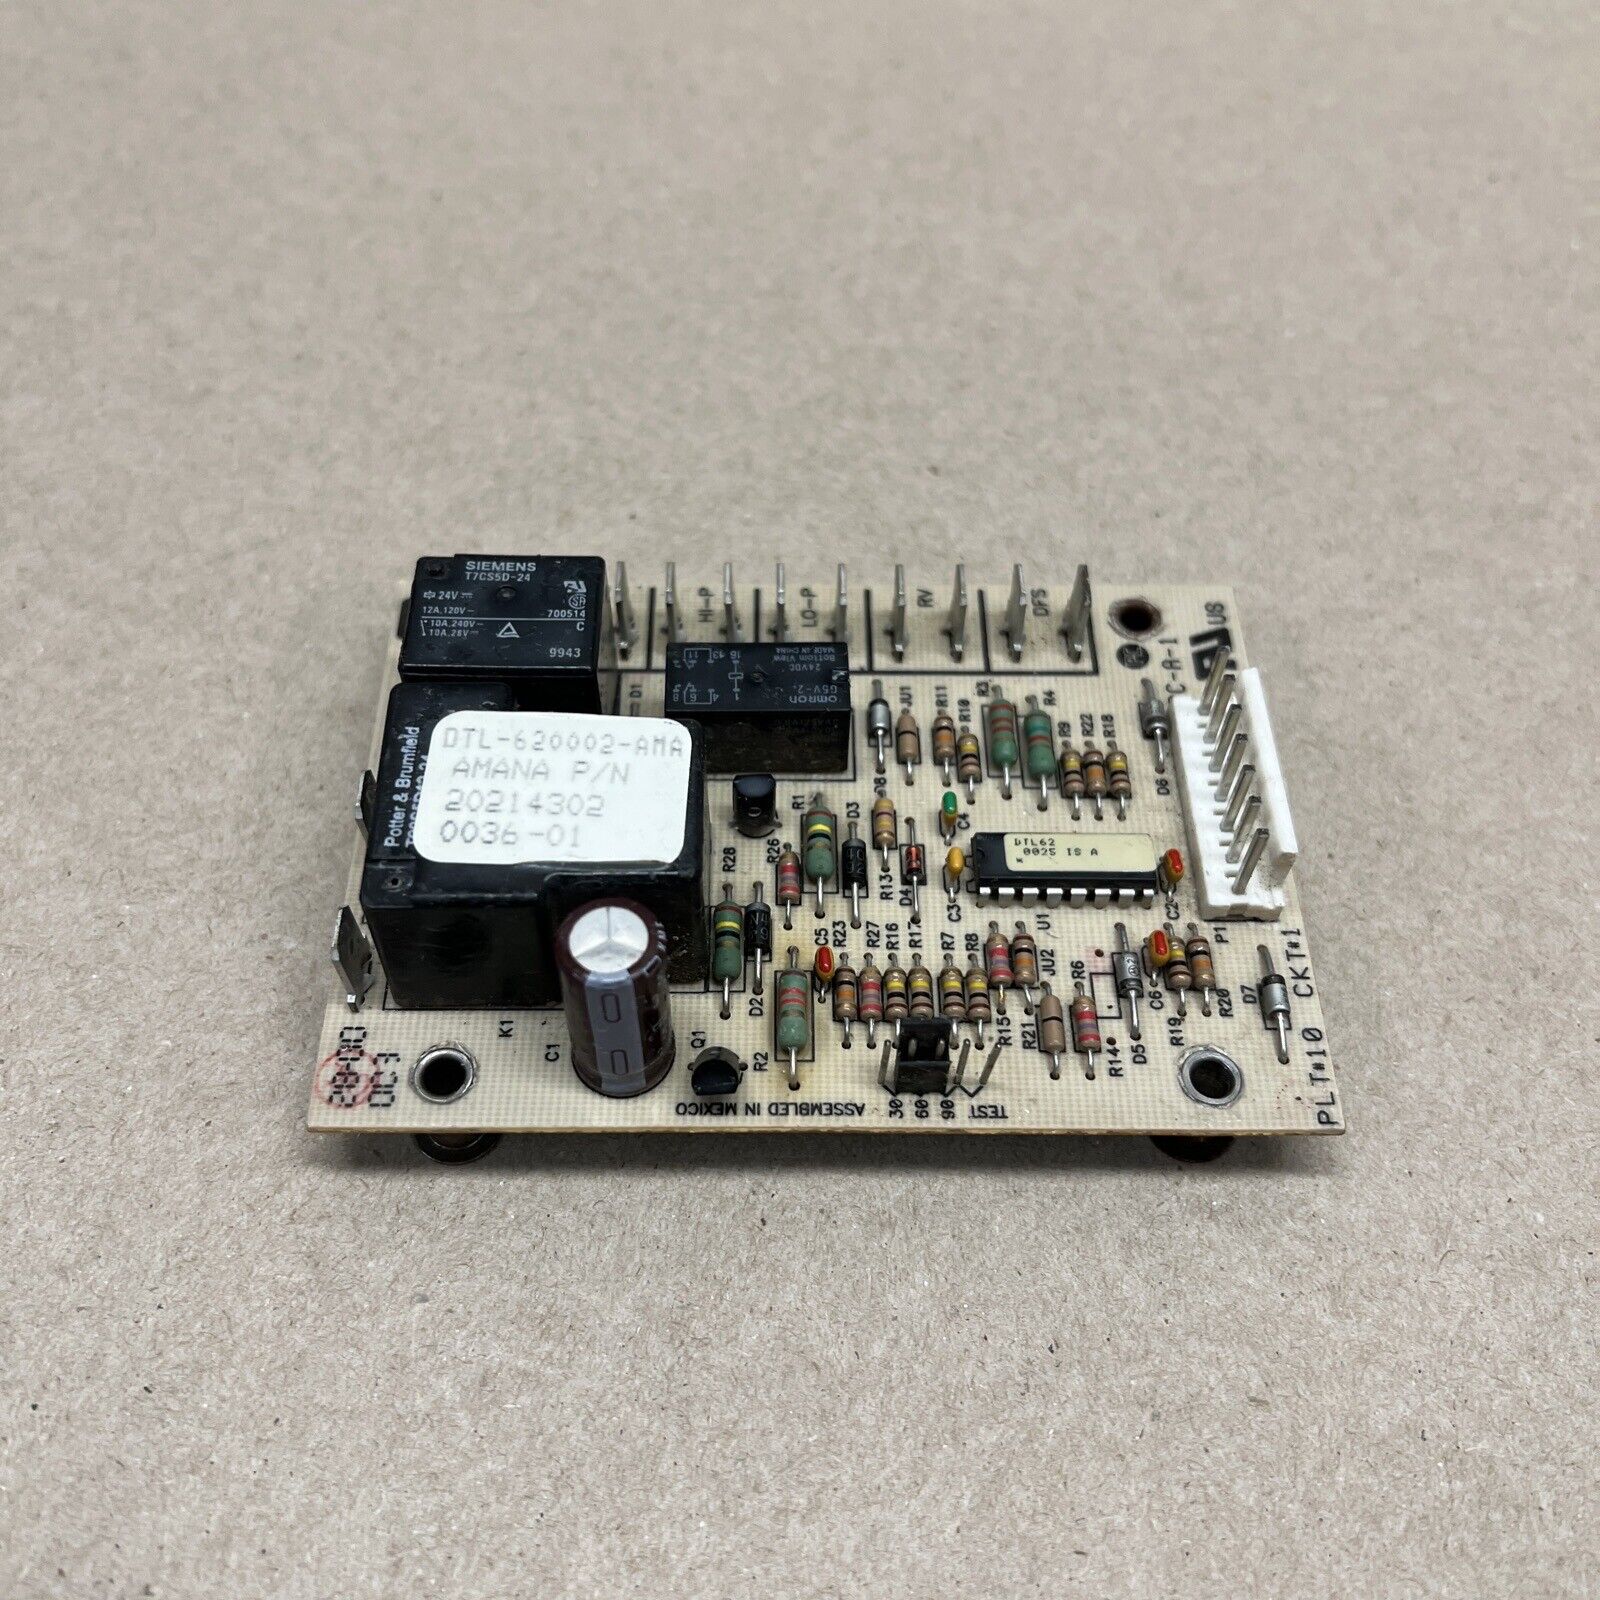 ICP Heil 20214302 Defrost Control Circuit Board DTL-620002-AMA B11